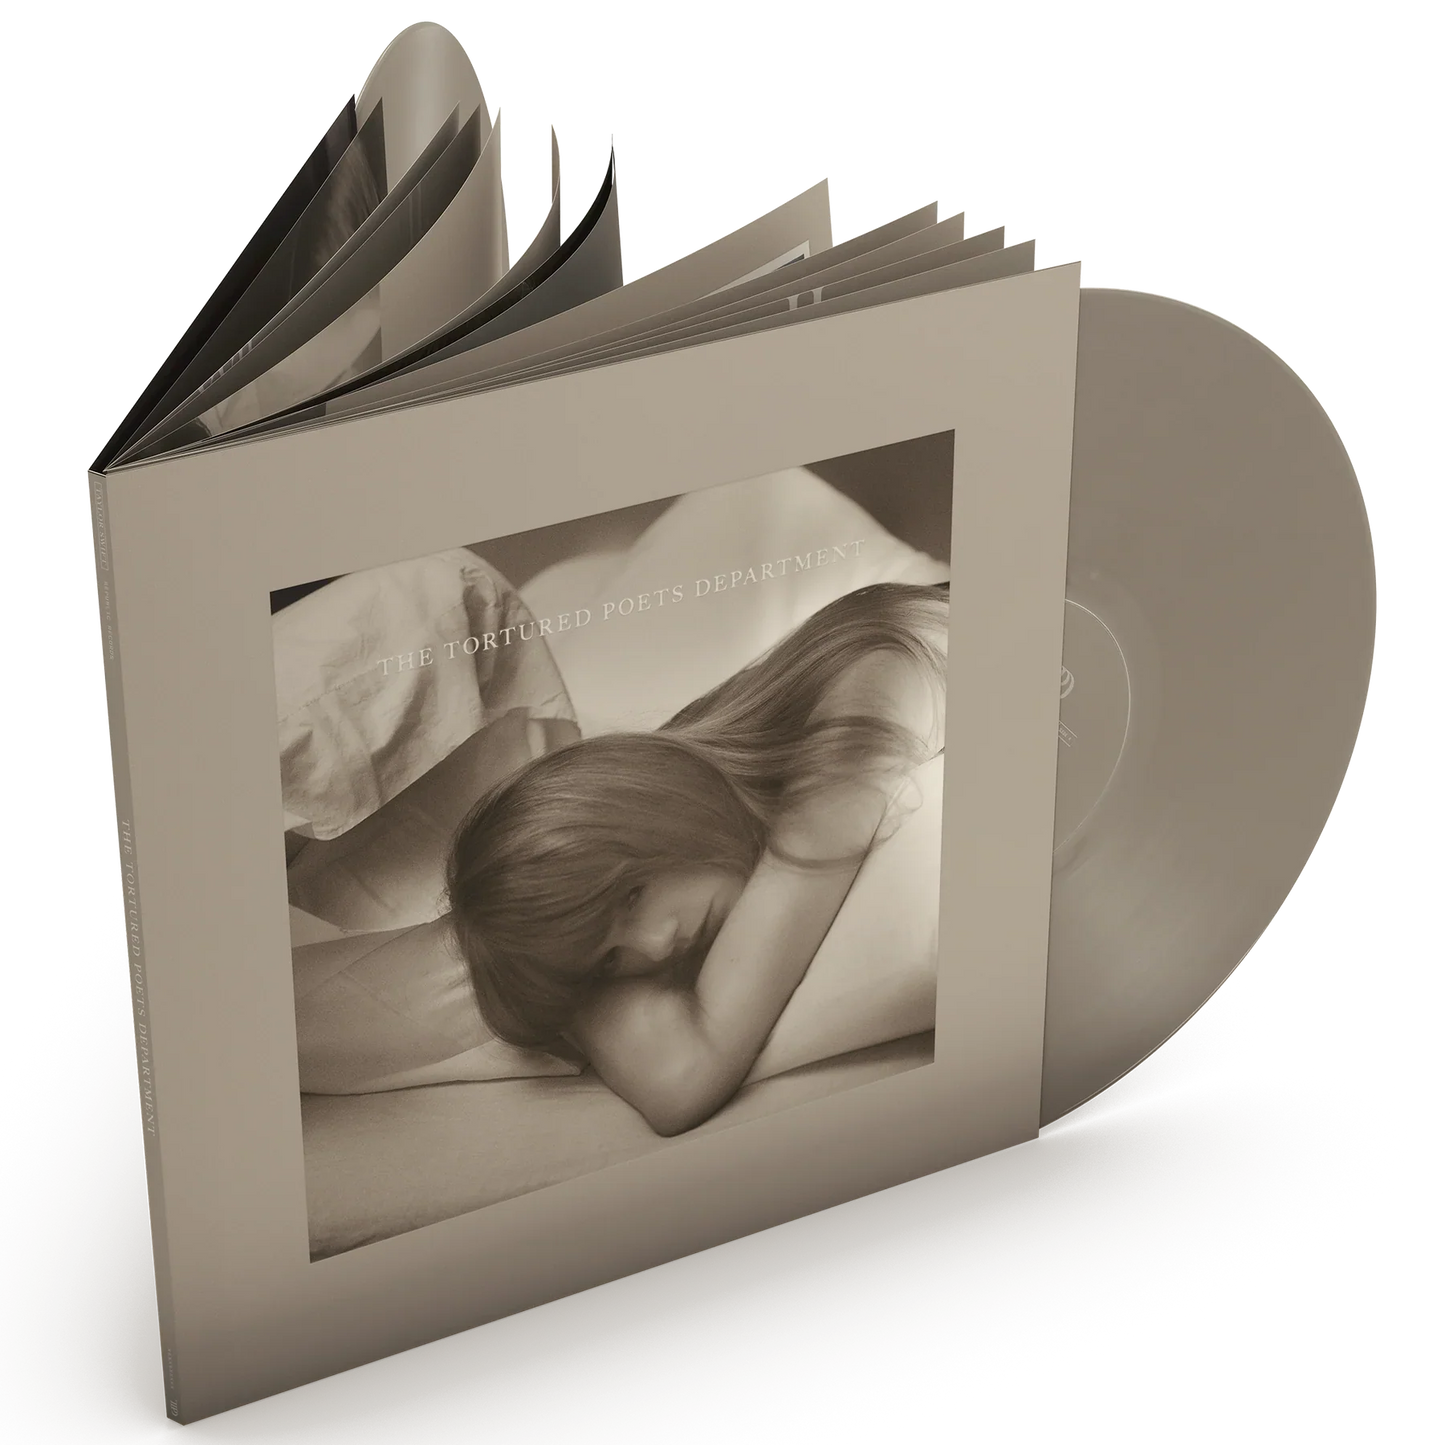 The Tortured Poets Department Vinyl - Taylor Swift